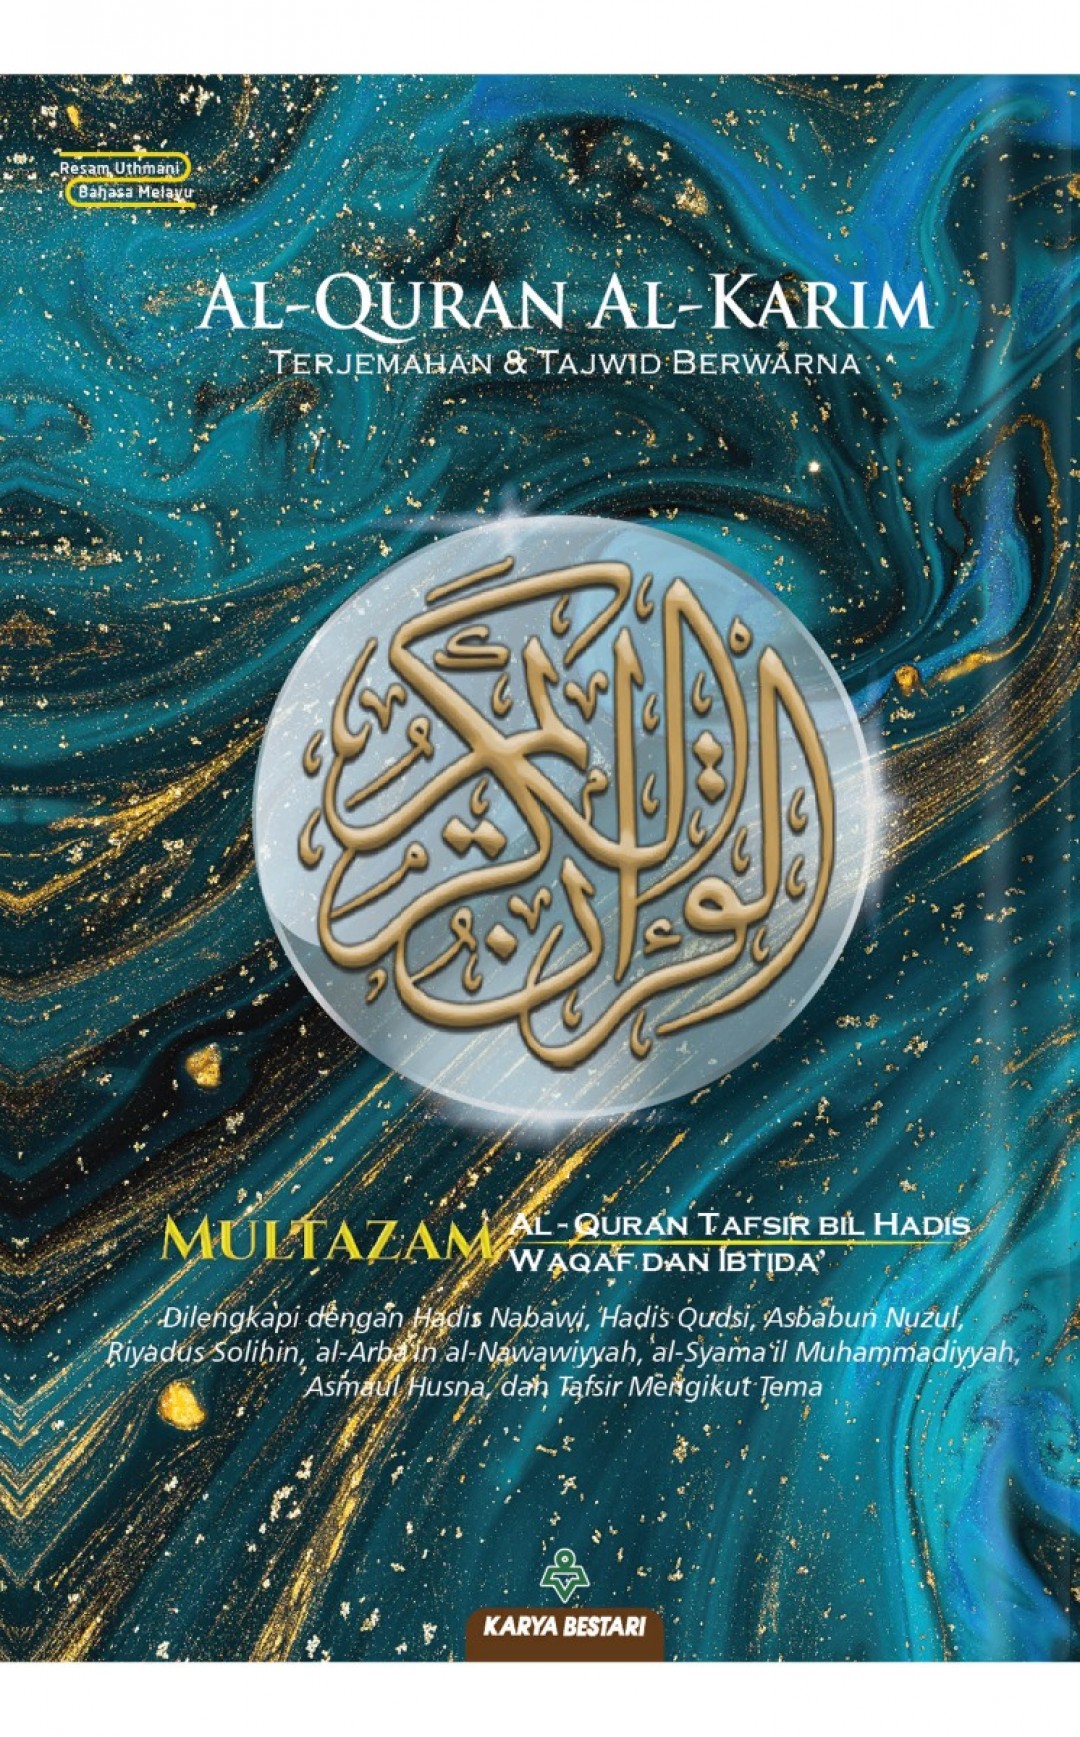 Al-Quran Al-Karim Multazam (Waqaf Ibtida') A6